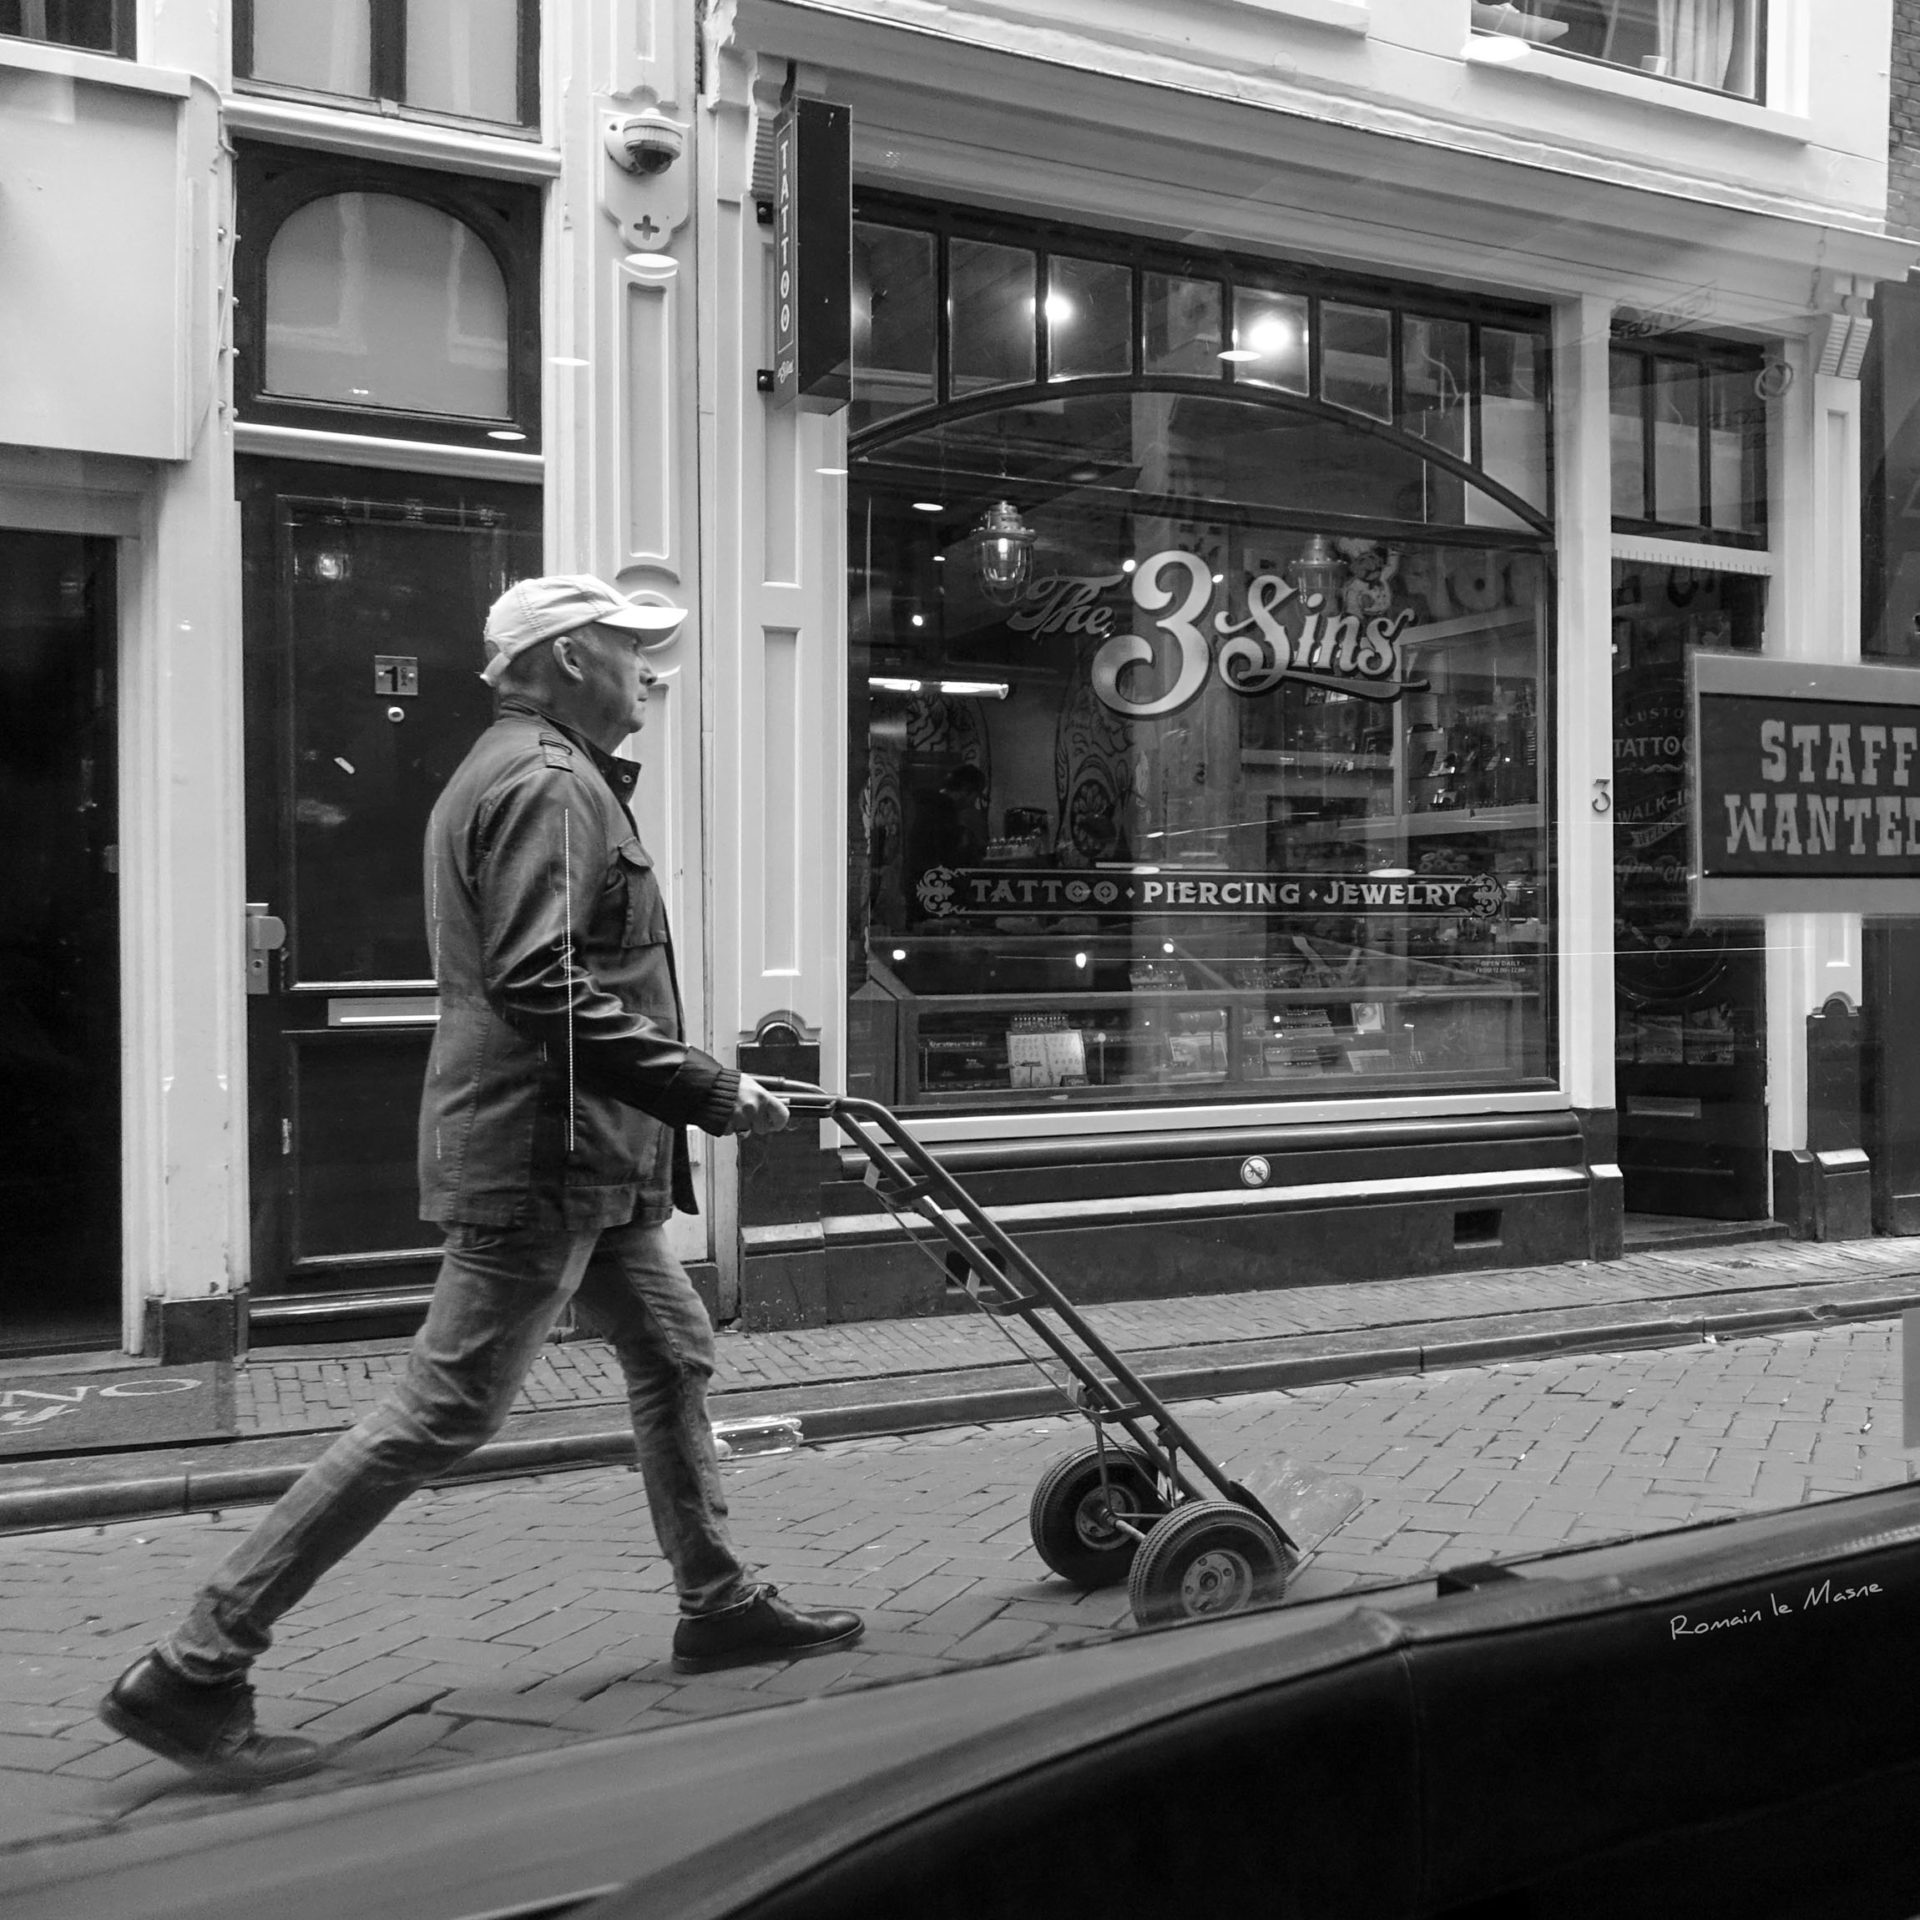 Man at work - Amsterdam - Apr17 (1x1)